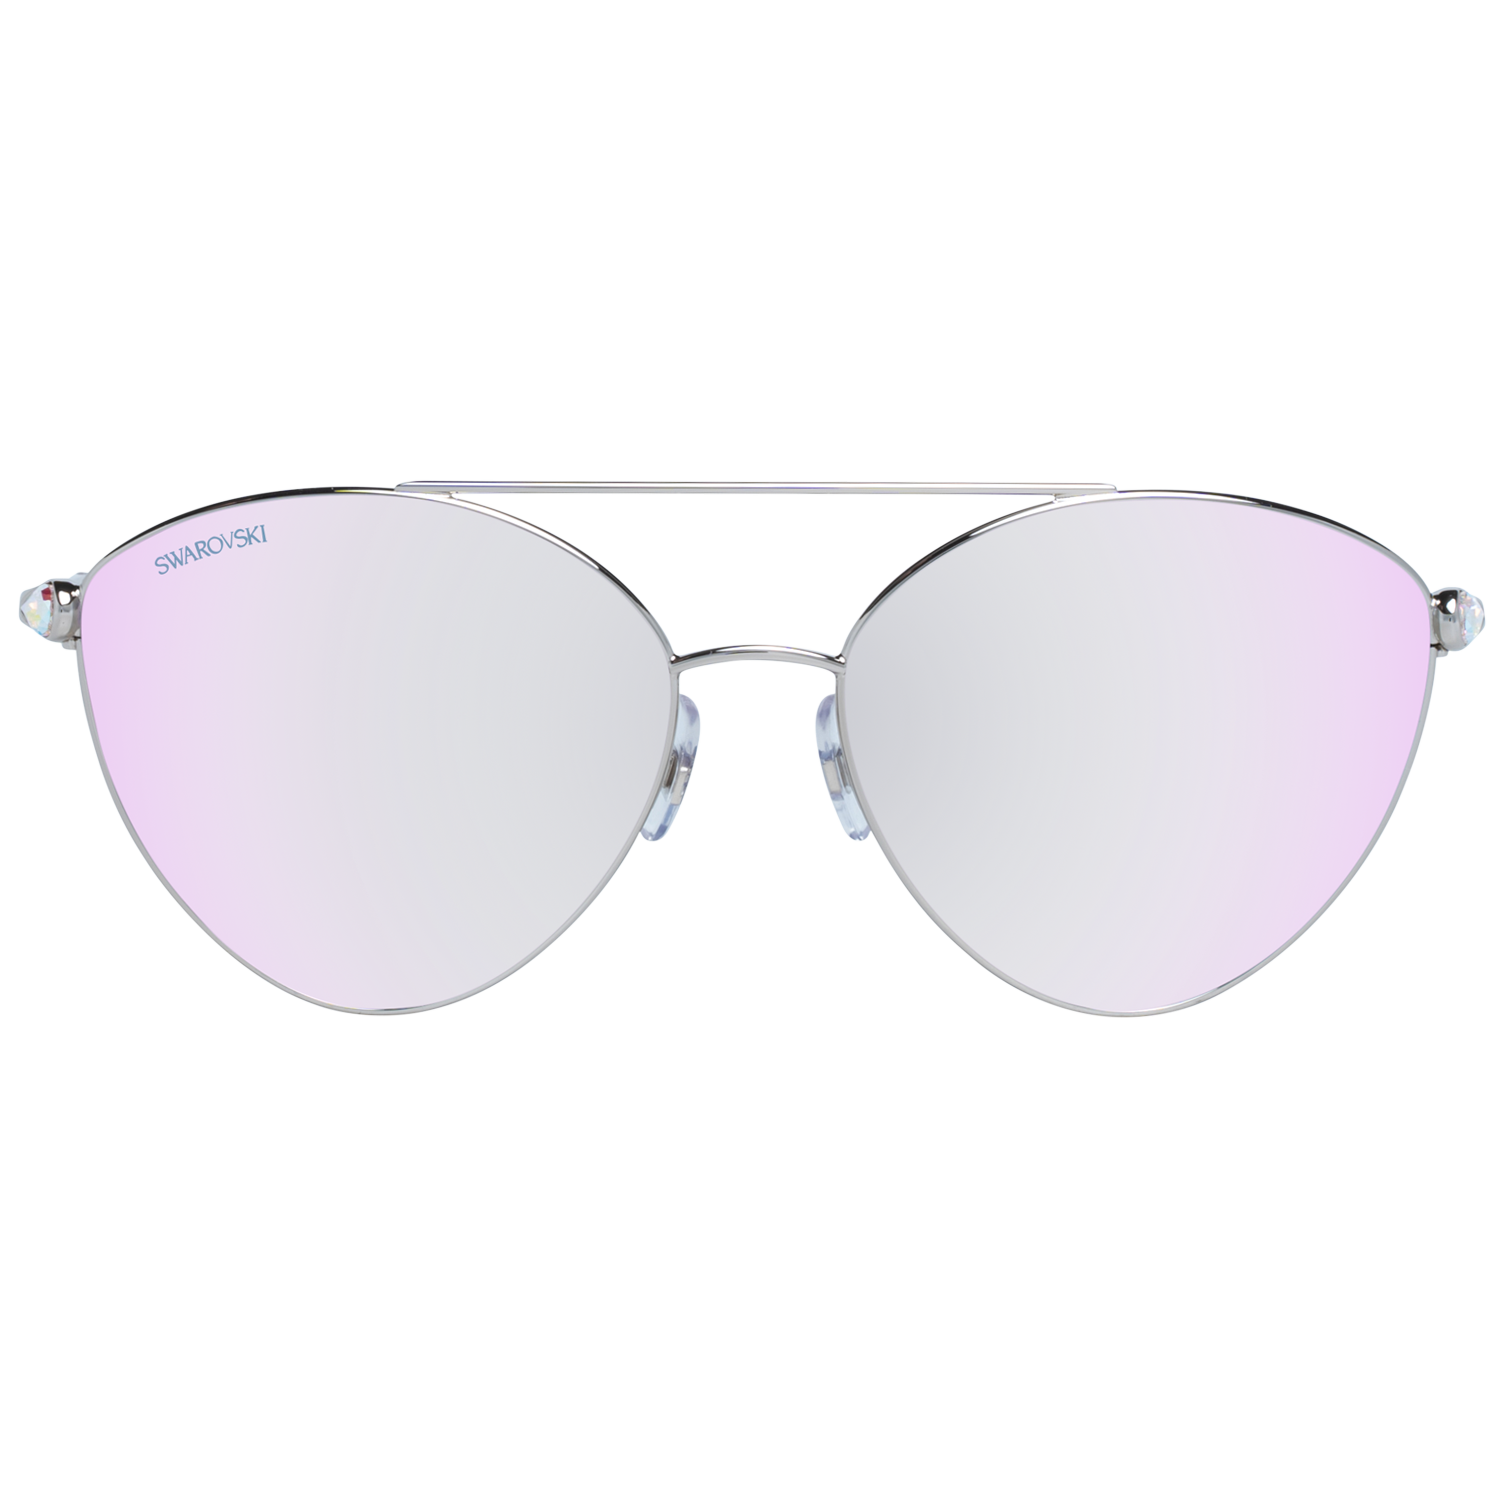 Swarovski Sunglasses Swarovski Sunglasses SK0286 16Z 58 Eyeglasses Eyewear UK USA Australia 